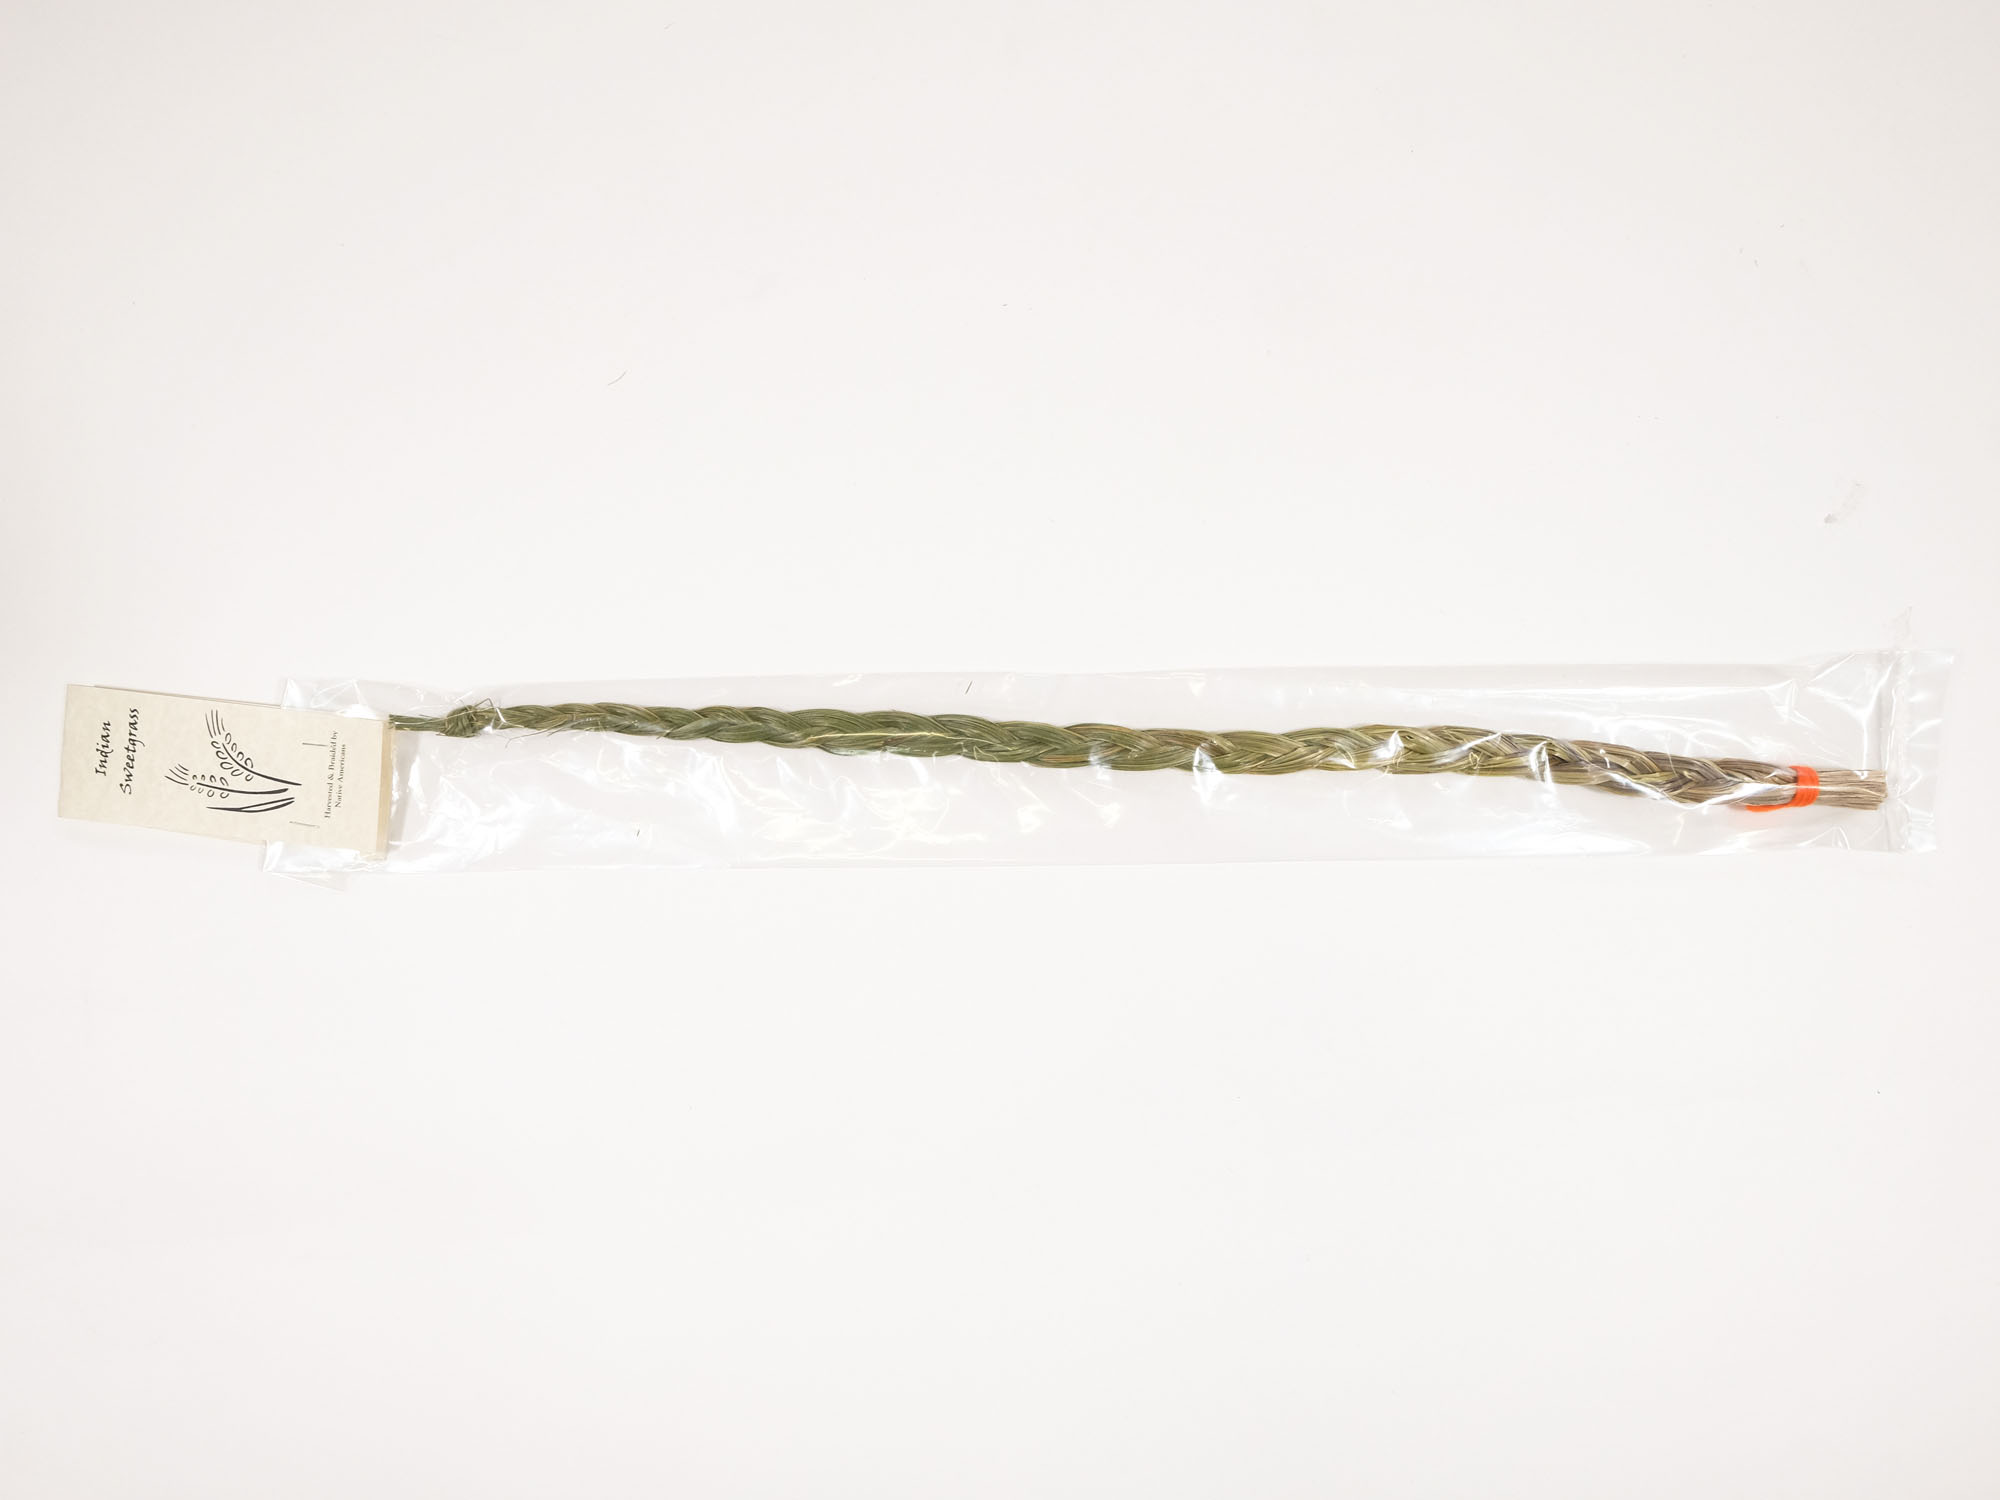 Packaged Sweetgrass Braid: Premium 